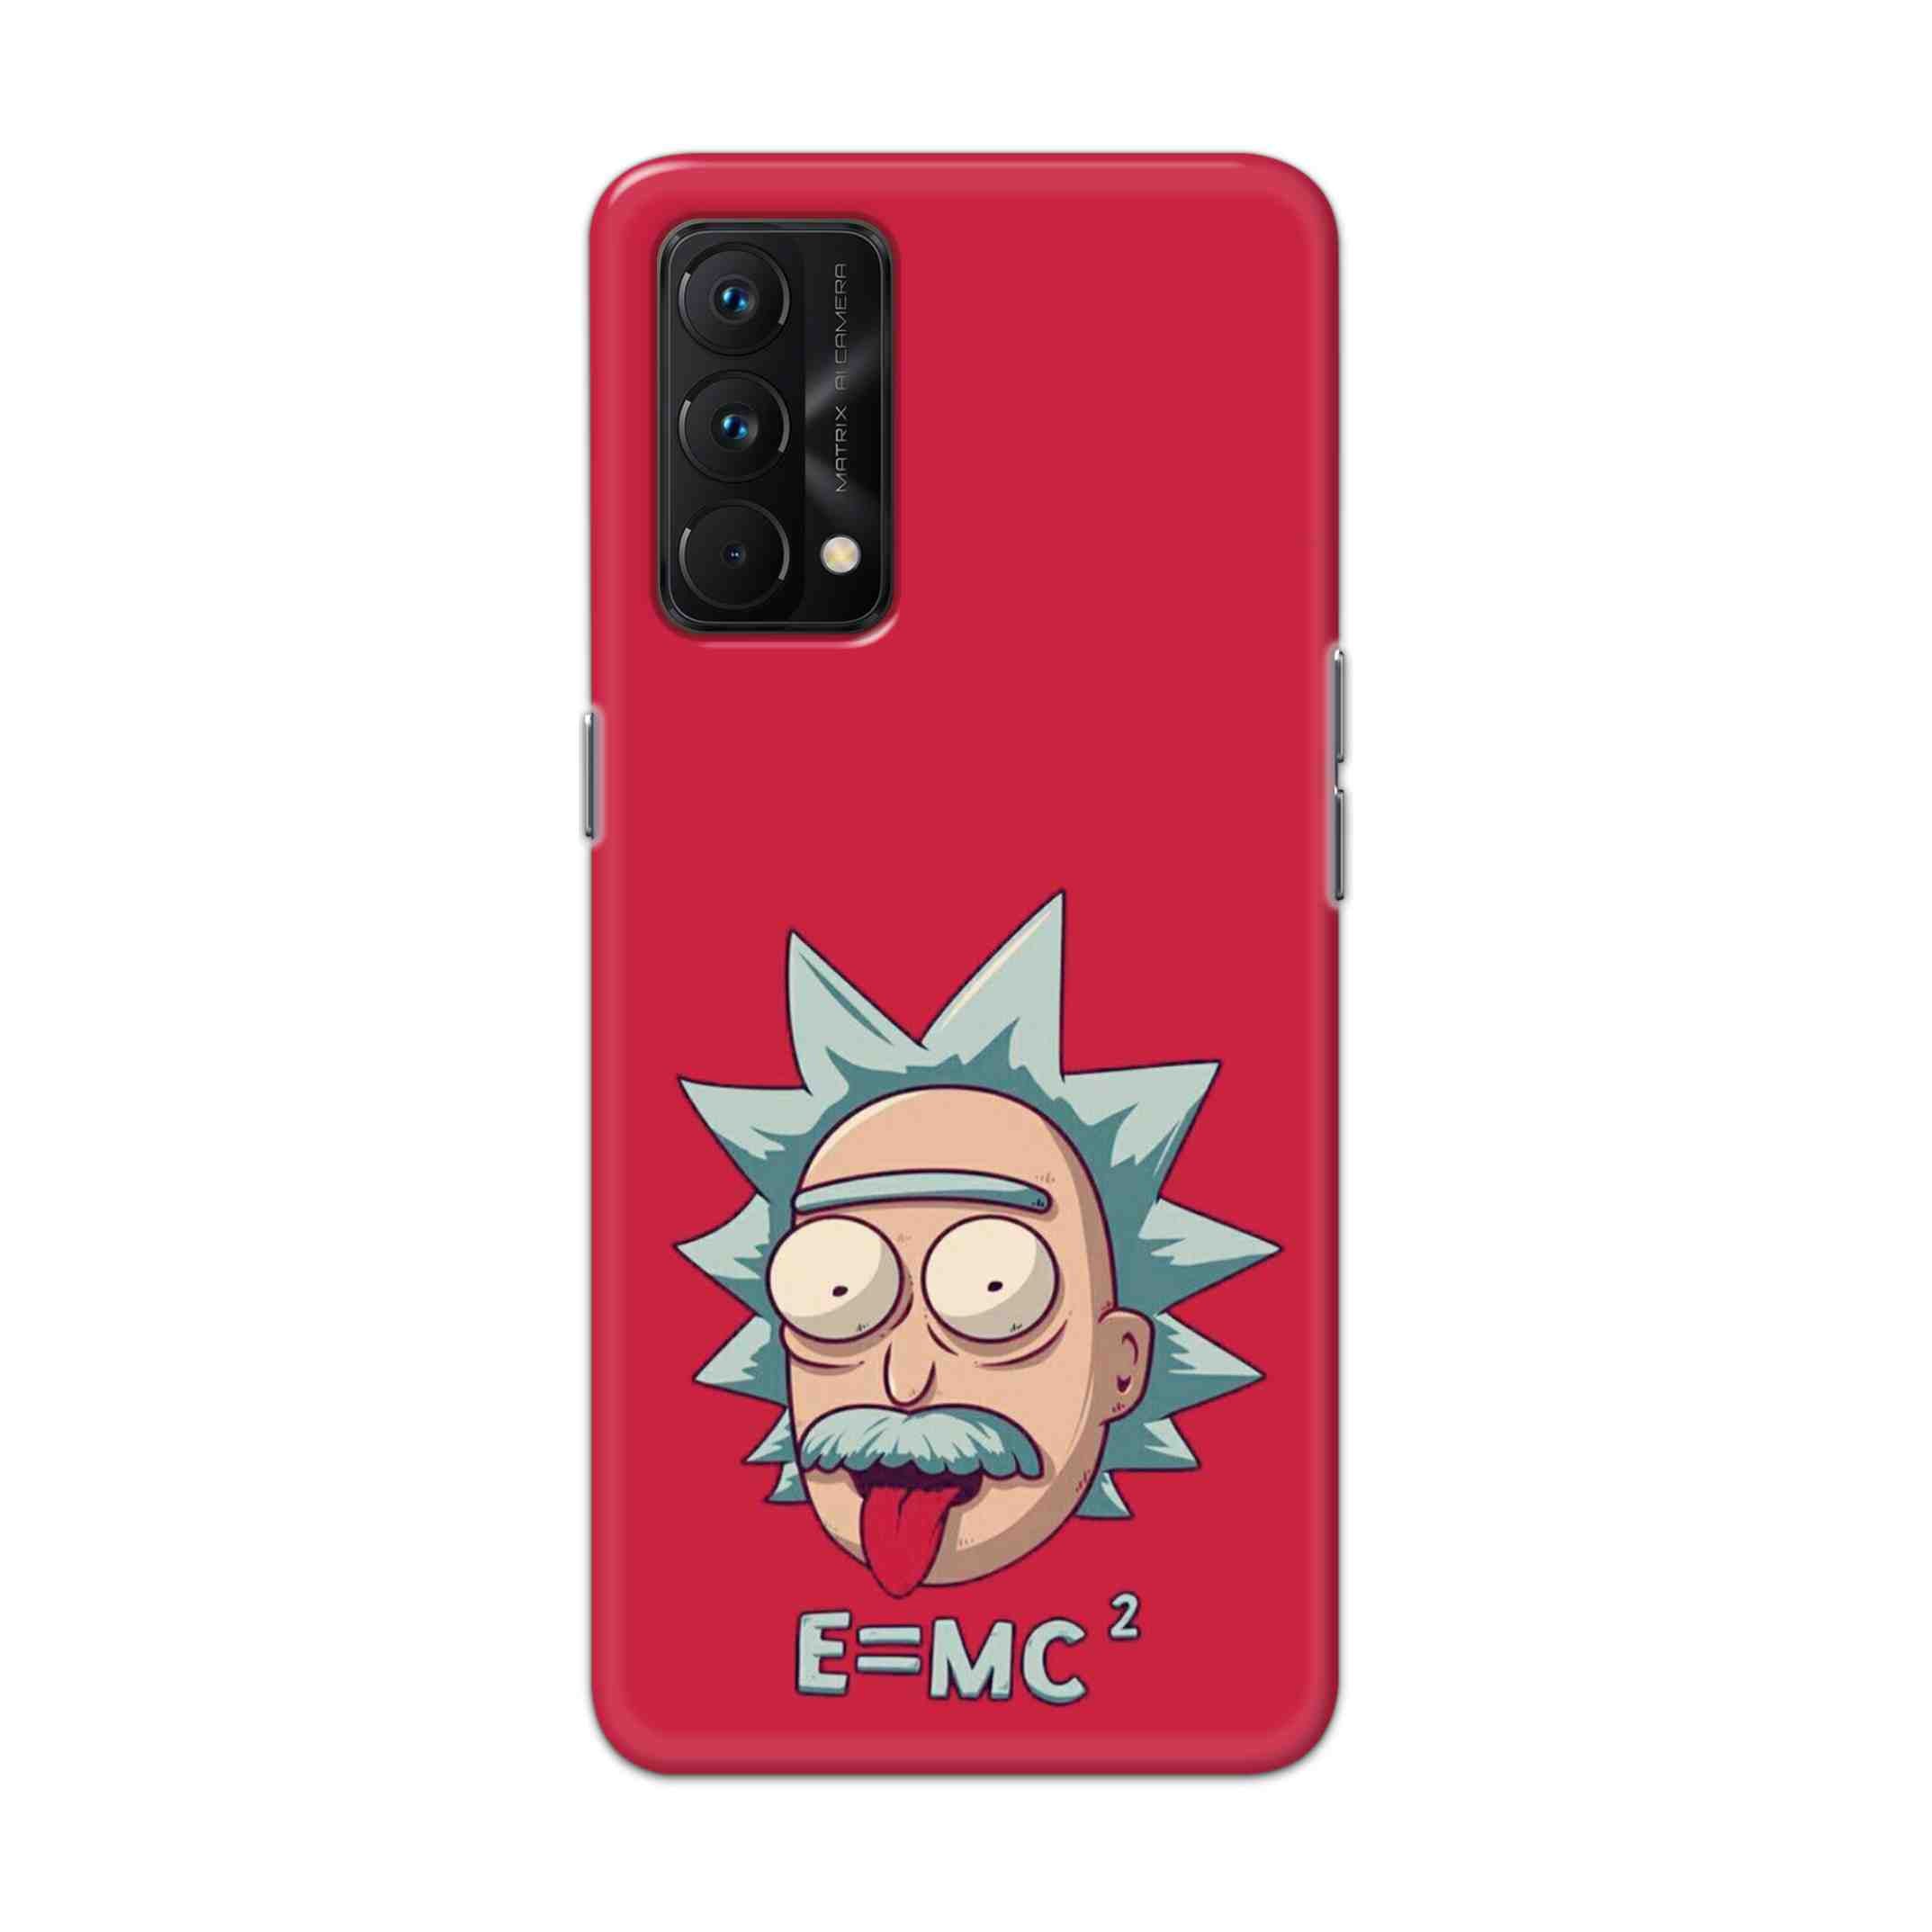 Buy E=Mc Hard Back Mobile Phone Case Cover For Realme GT Master Online